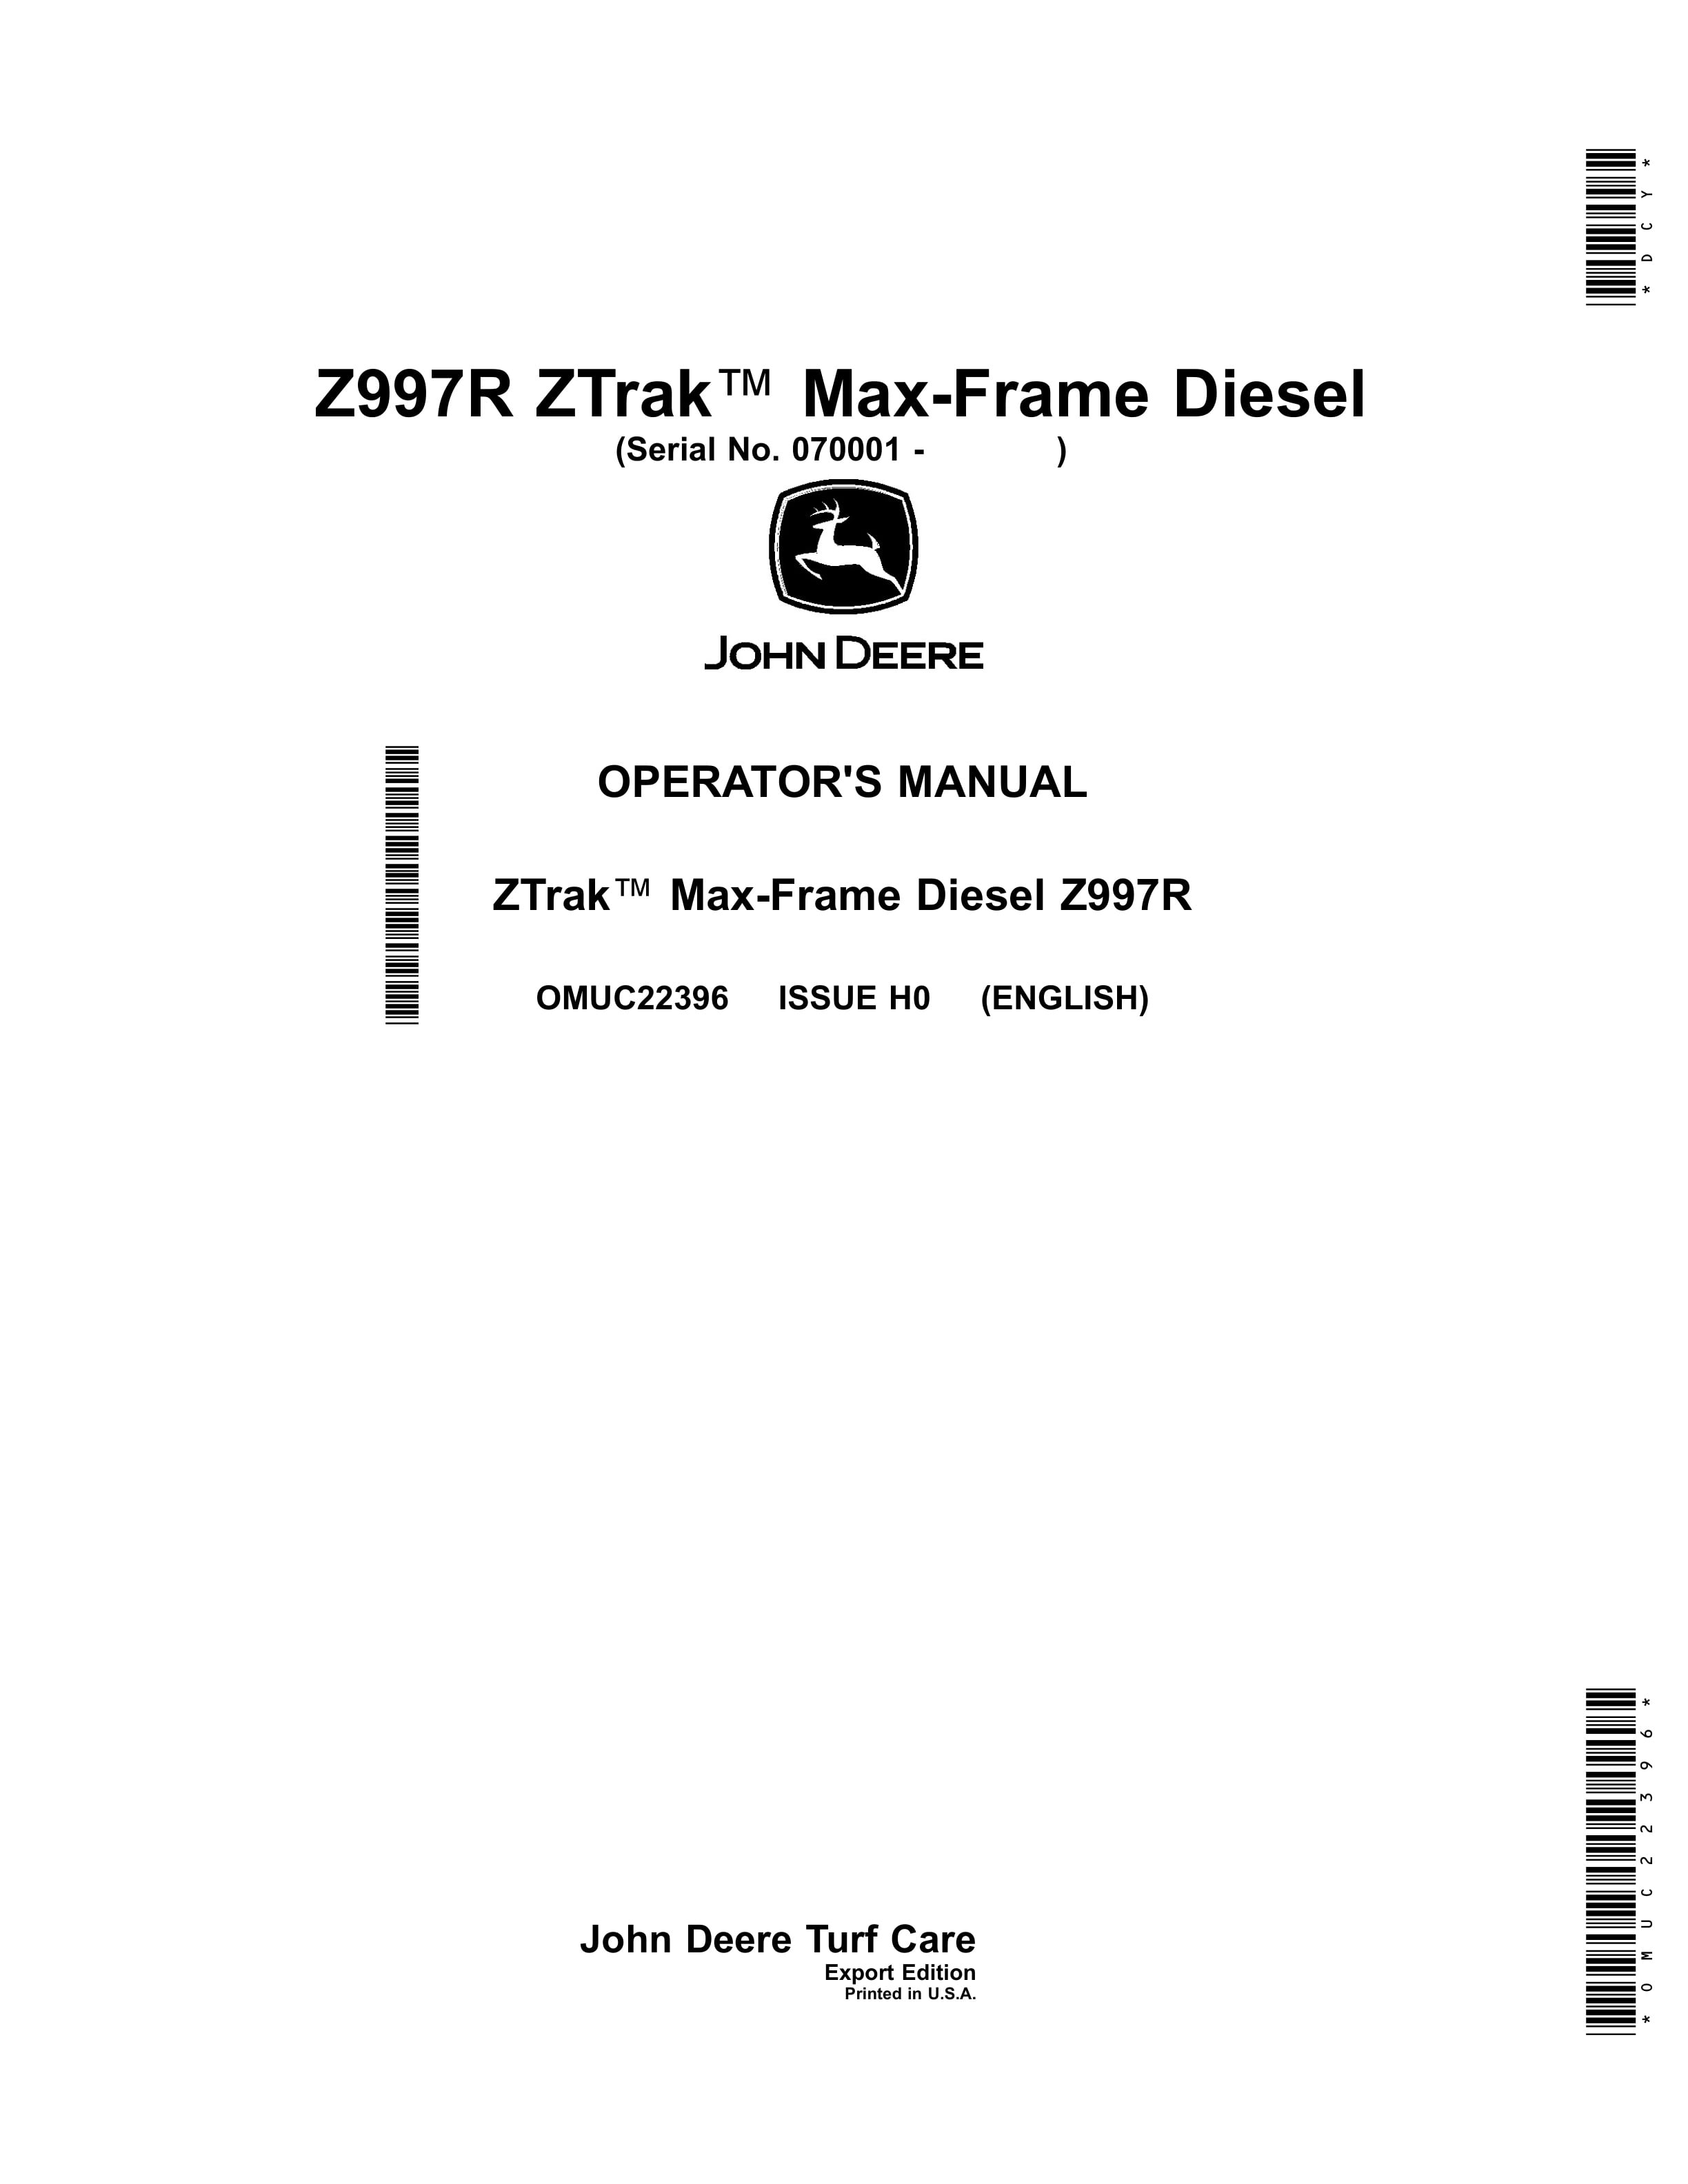 John Deere Z997R ZTrak Max Frame Diesel Operator Manual OMUC22396 1